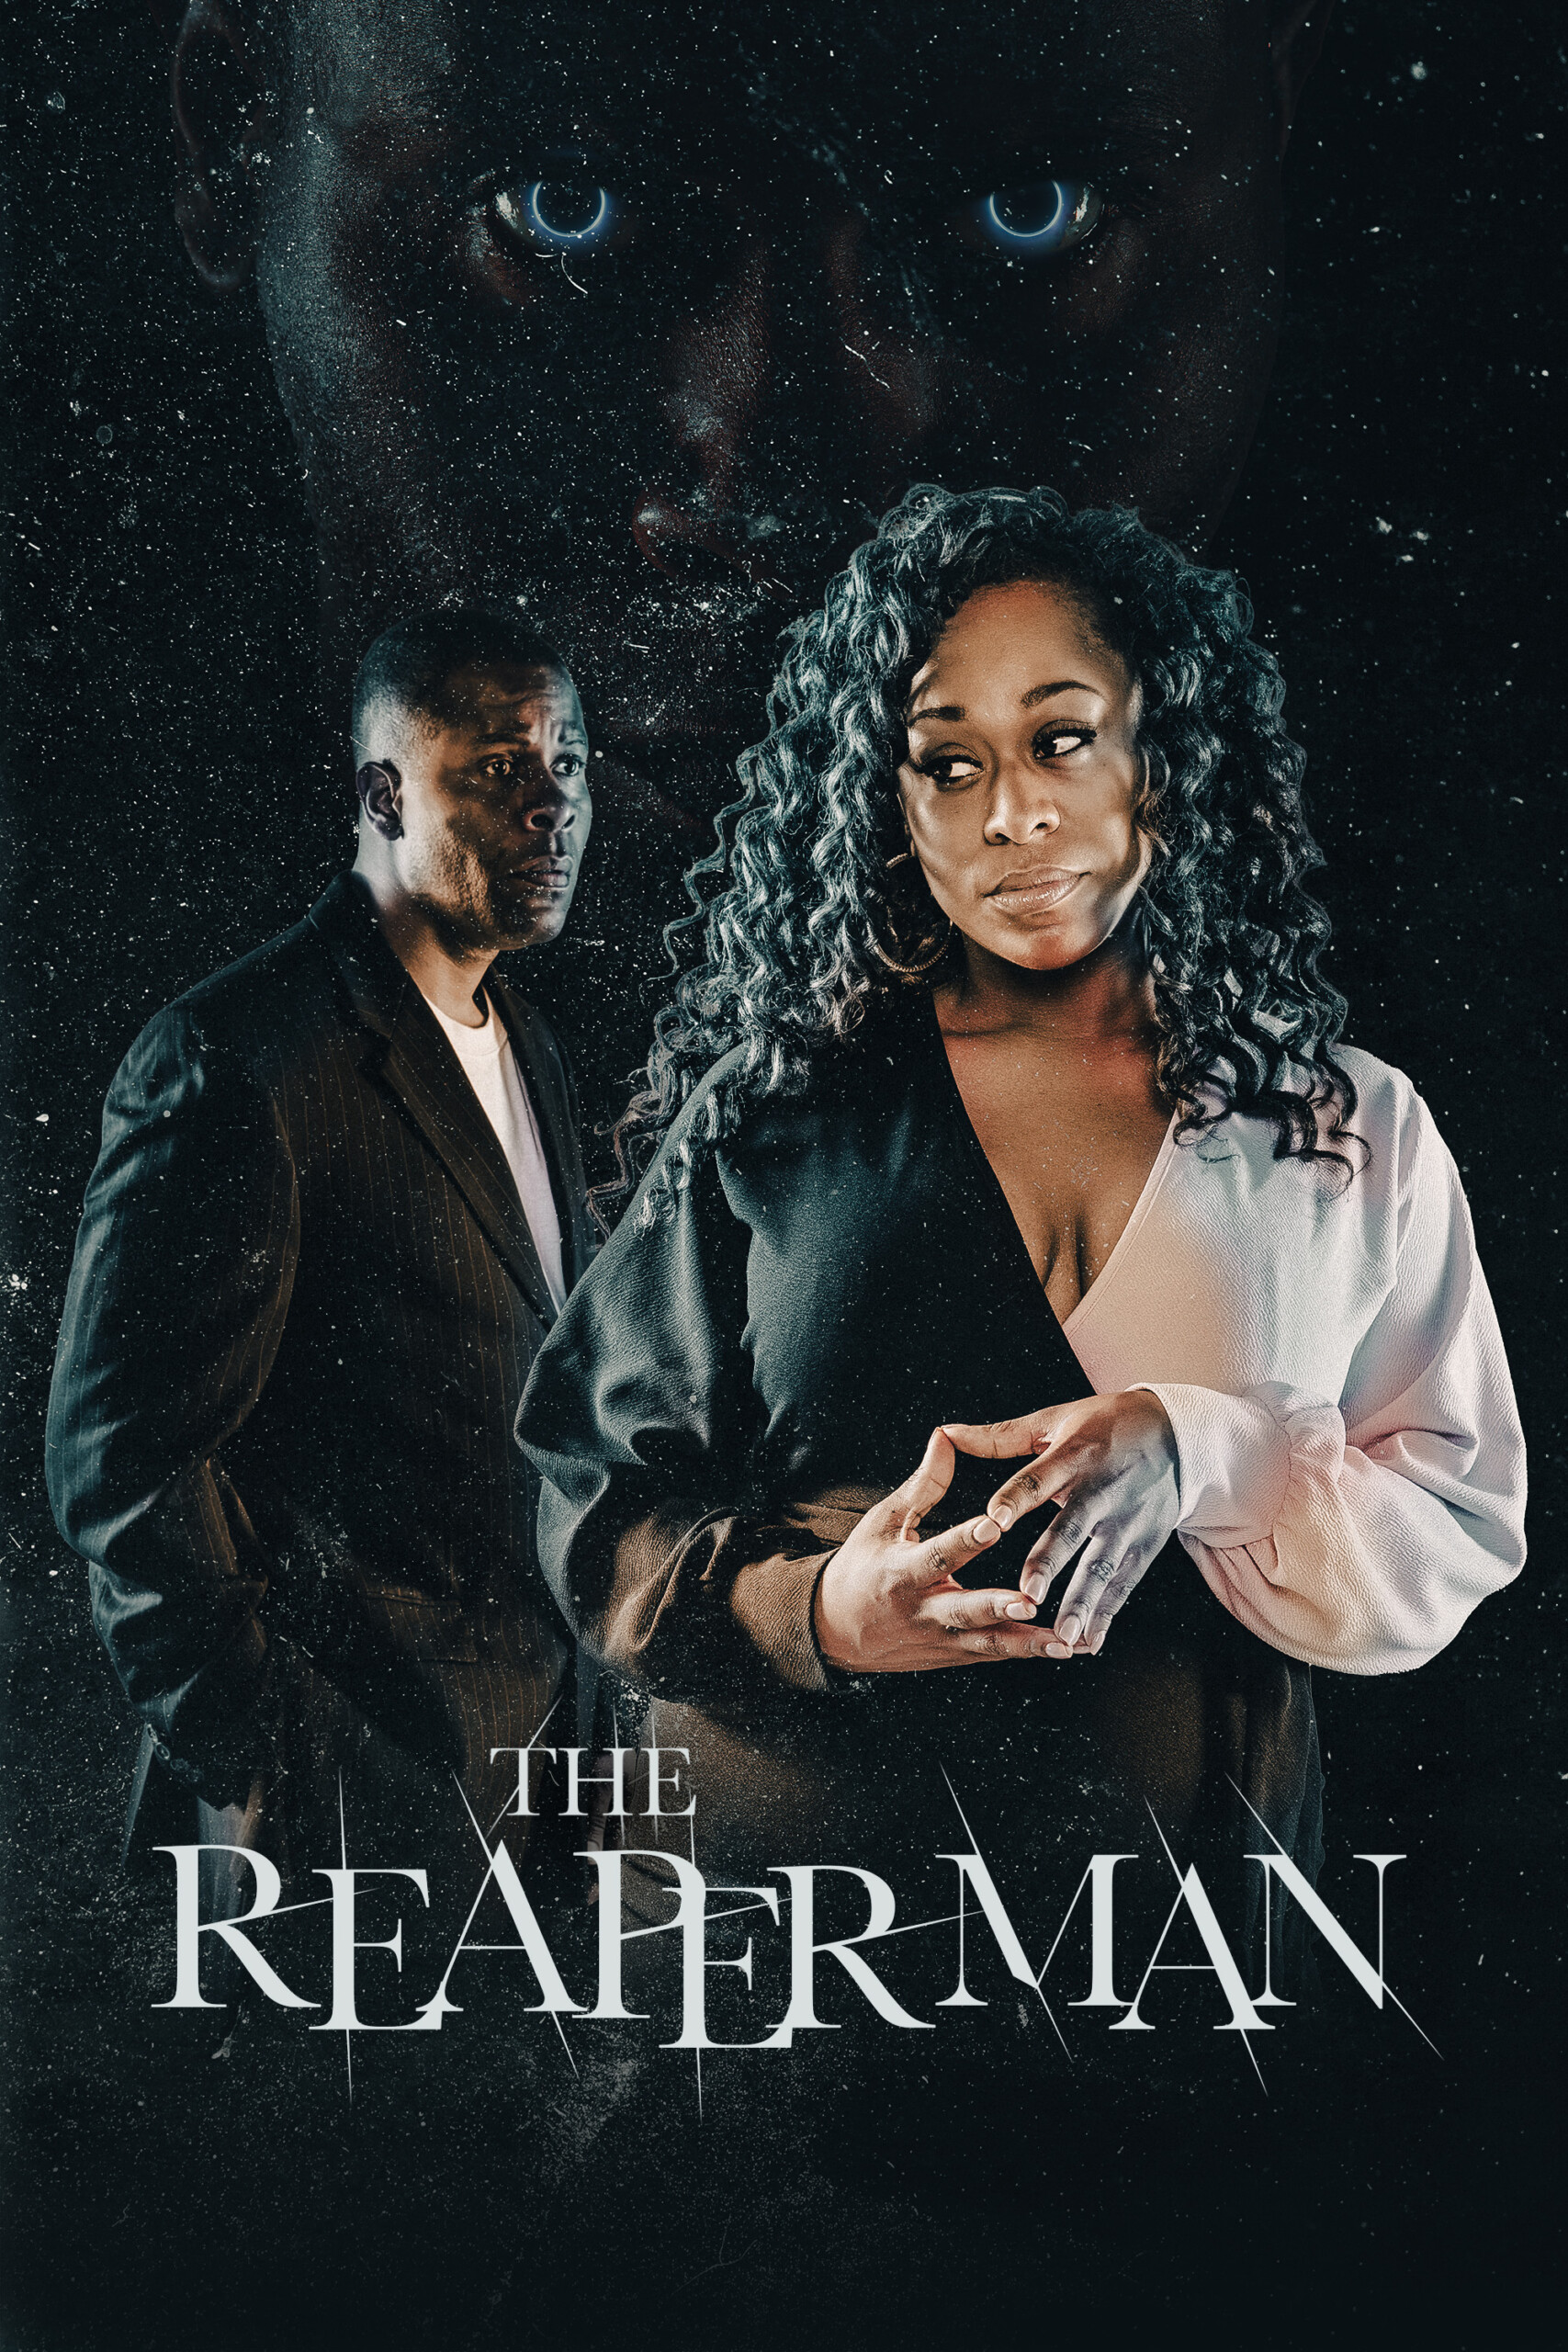 Jackson filmmaker releases new movie The Reaper Man